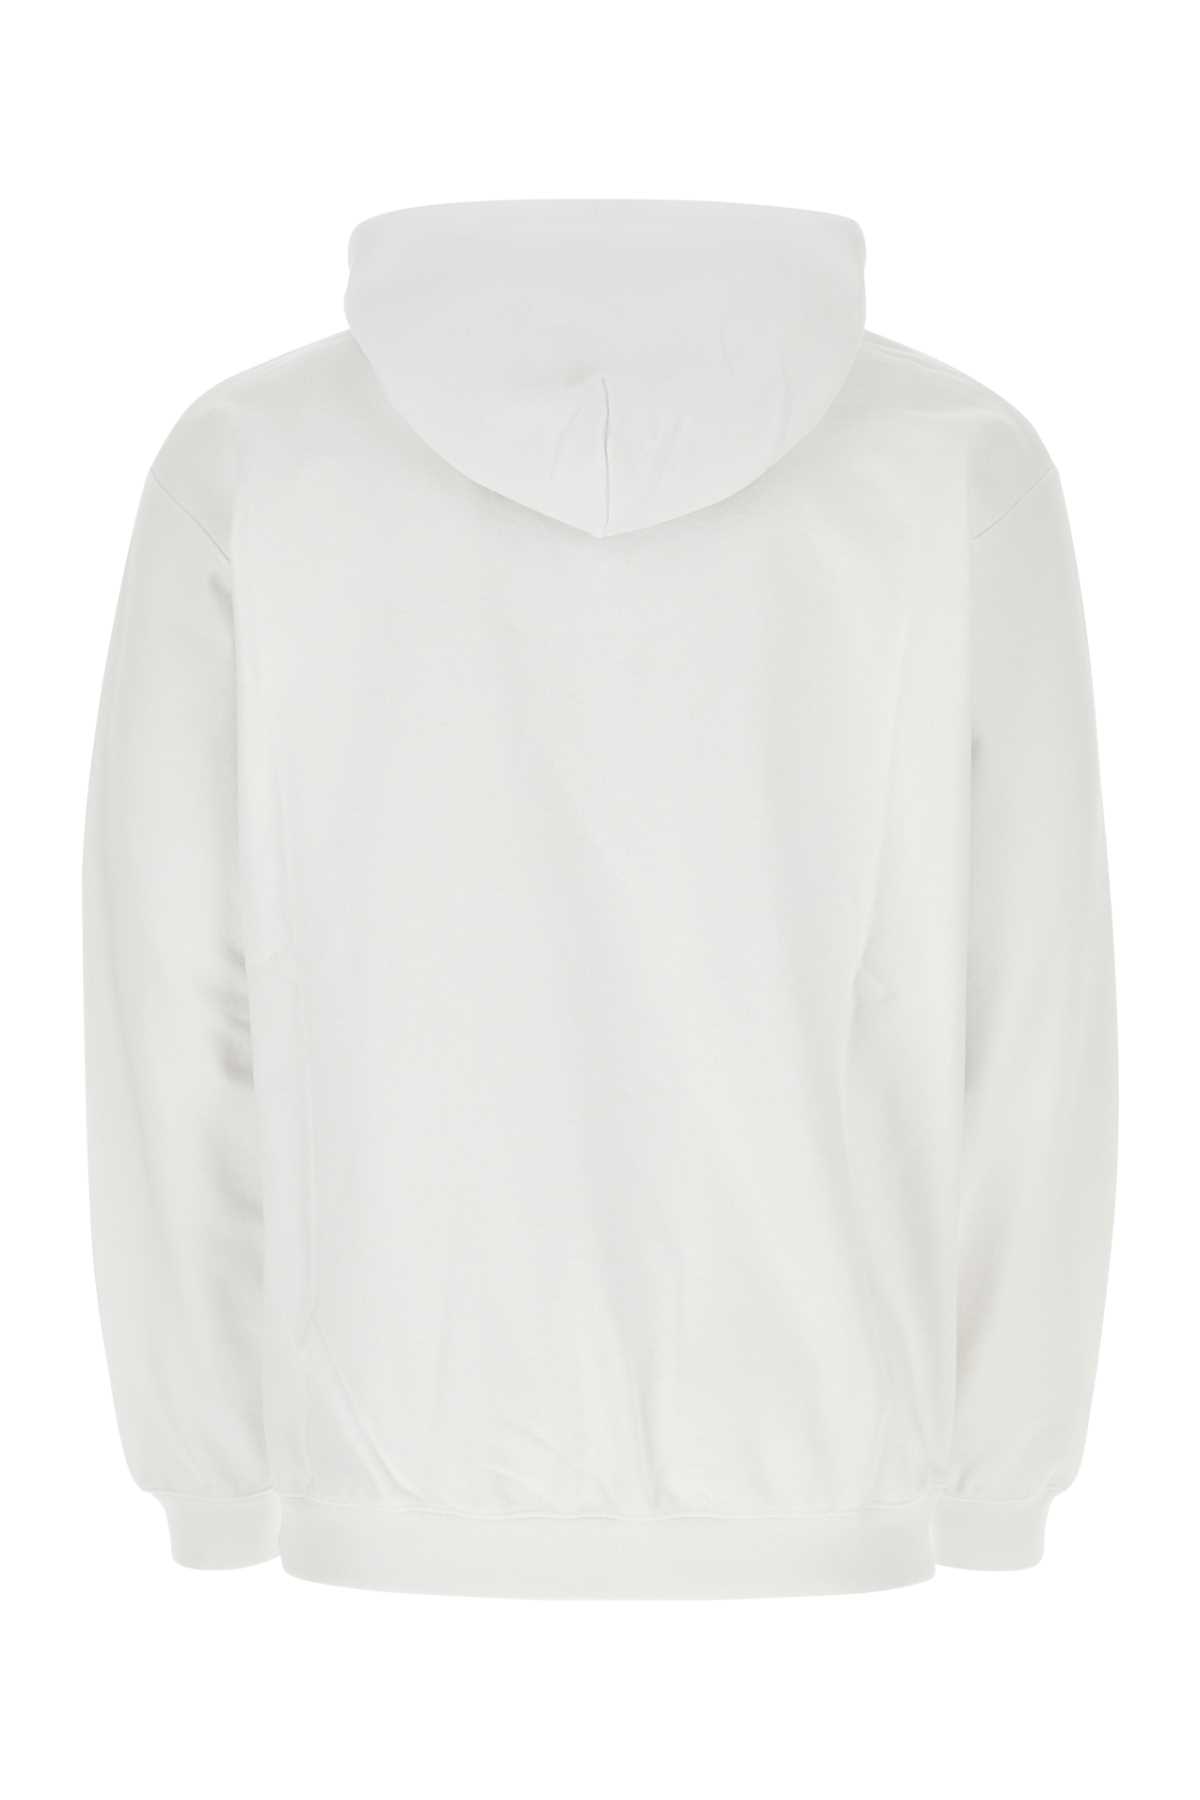 Vtmnts White Cotton Blend Oversize Sweatshirt In White / Black